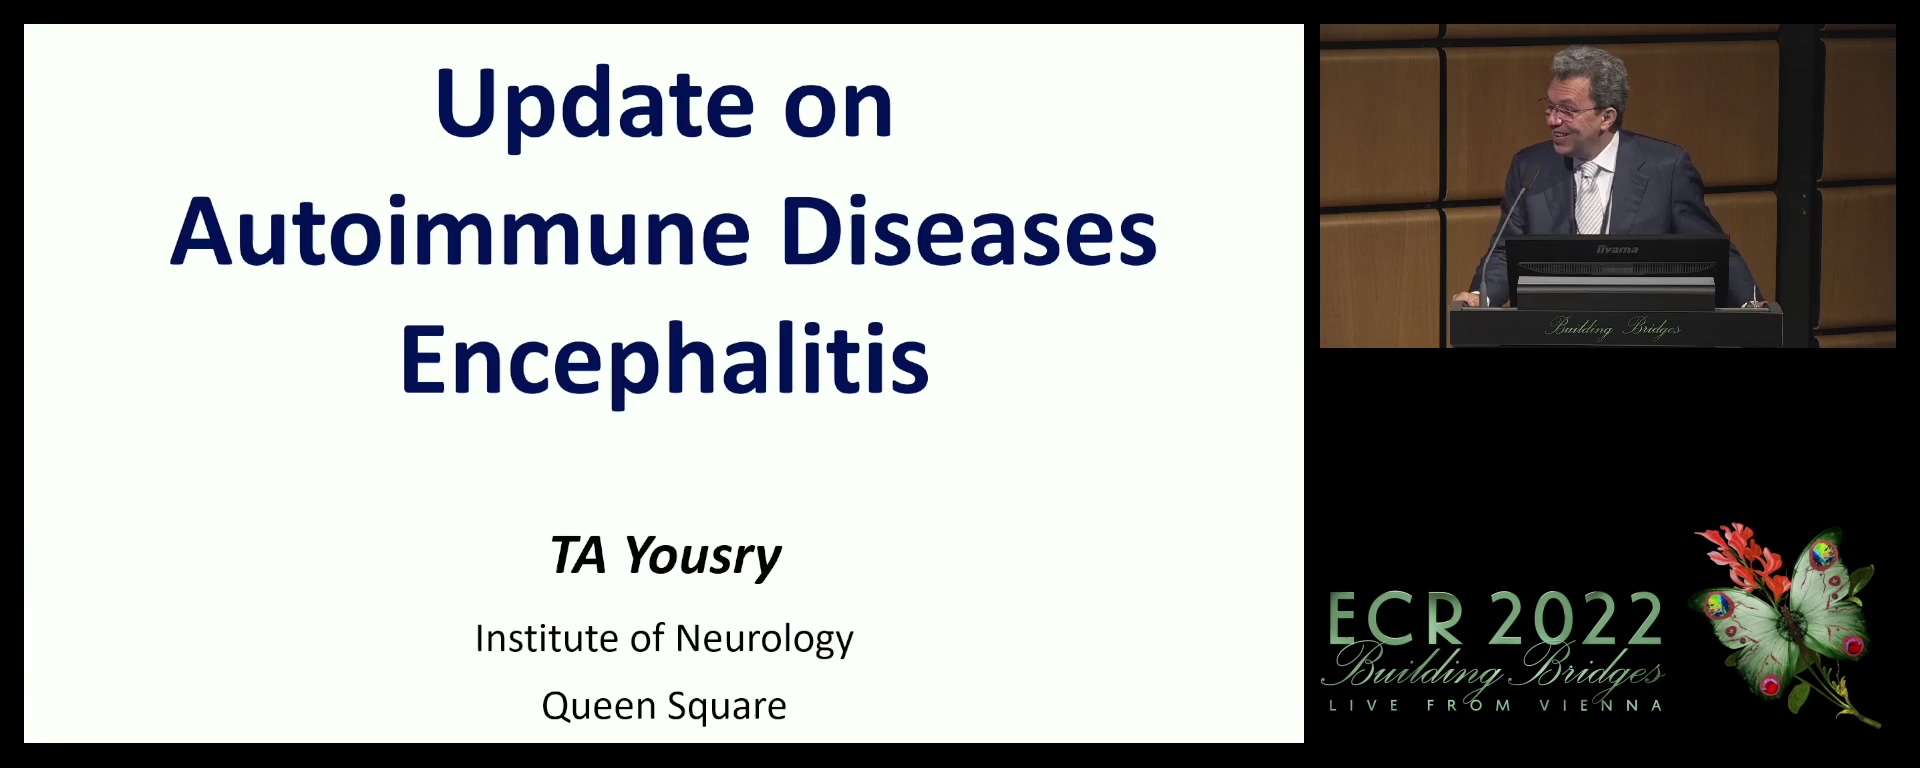 Update on autoimmune diseases and encephalitis - Tarek A. Yousry, London / UK